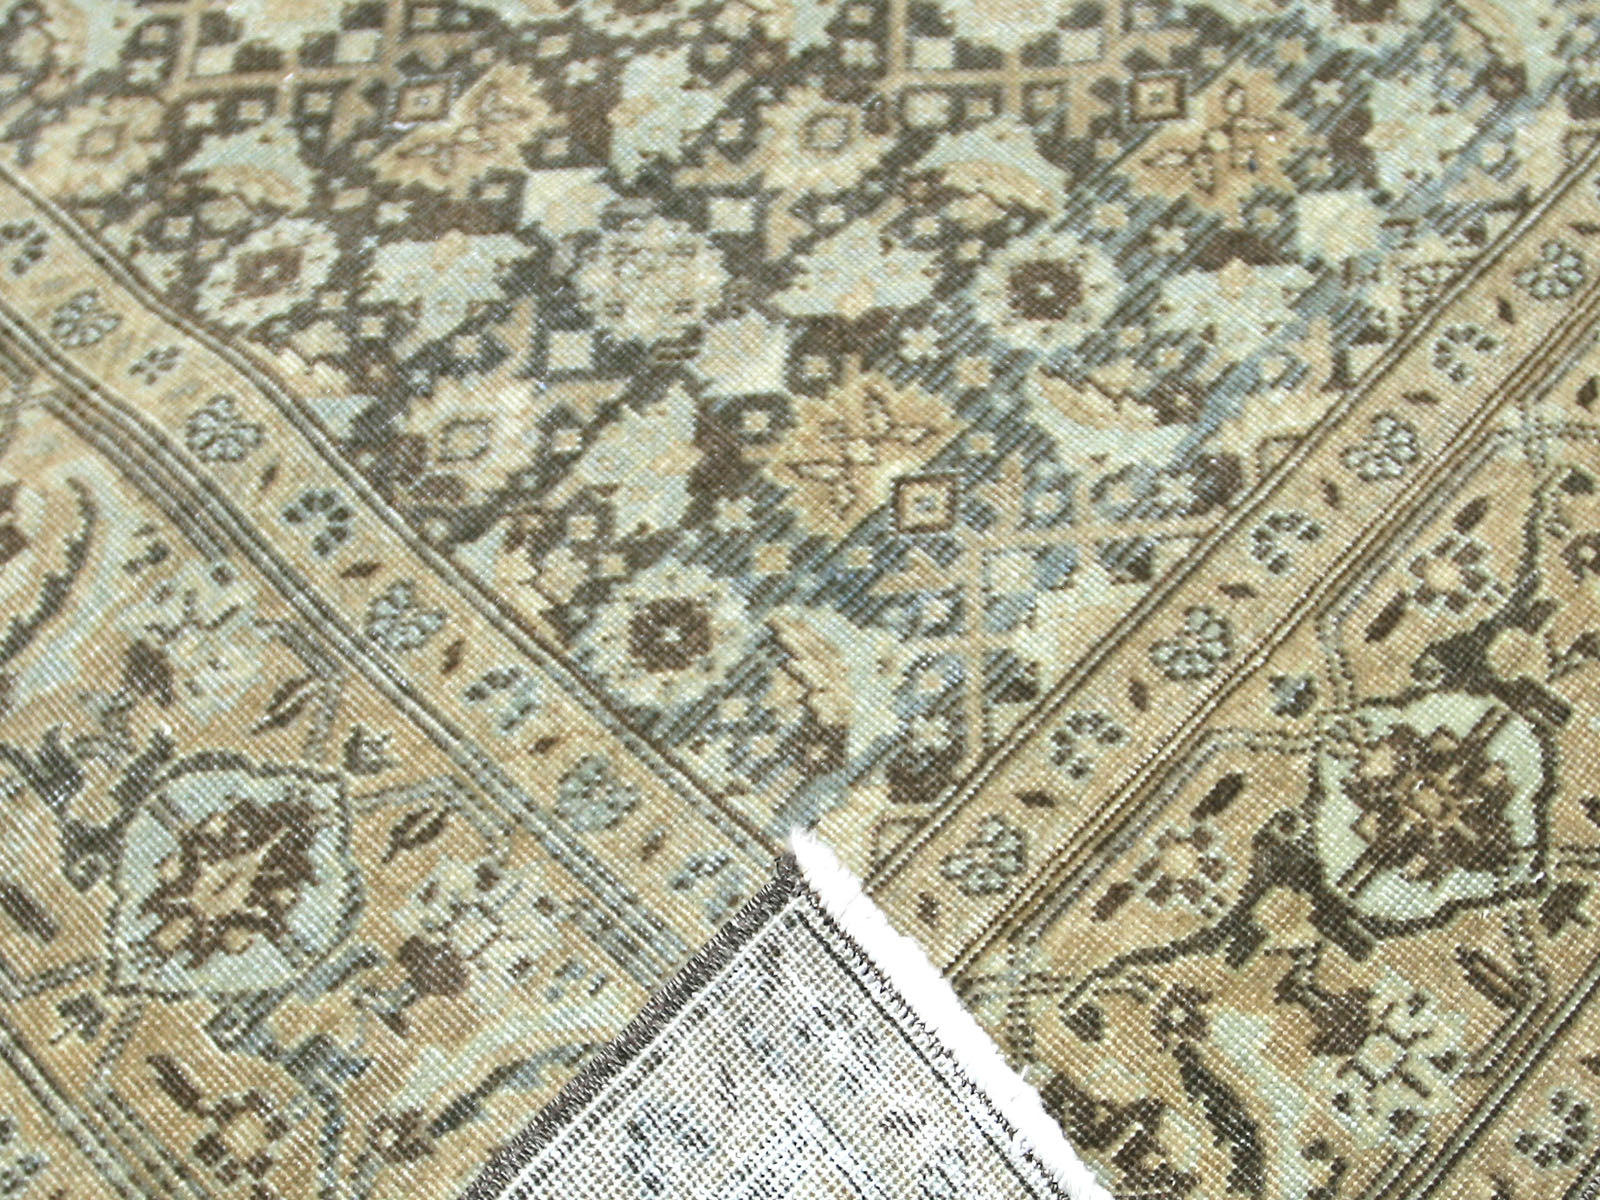 Antique Persian Tabriz Rug - 4'6" x 6'5"